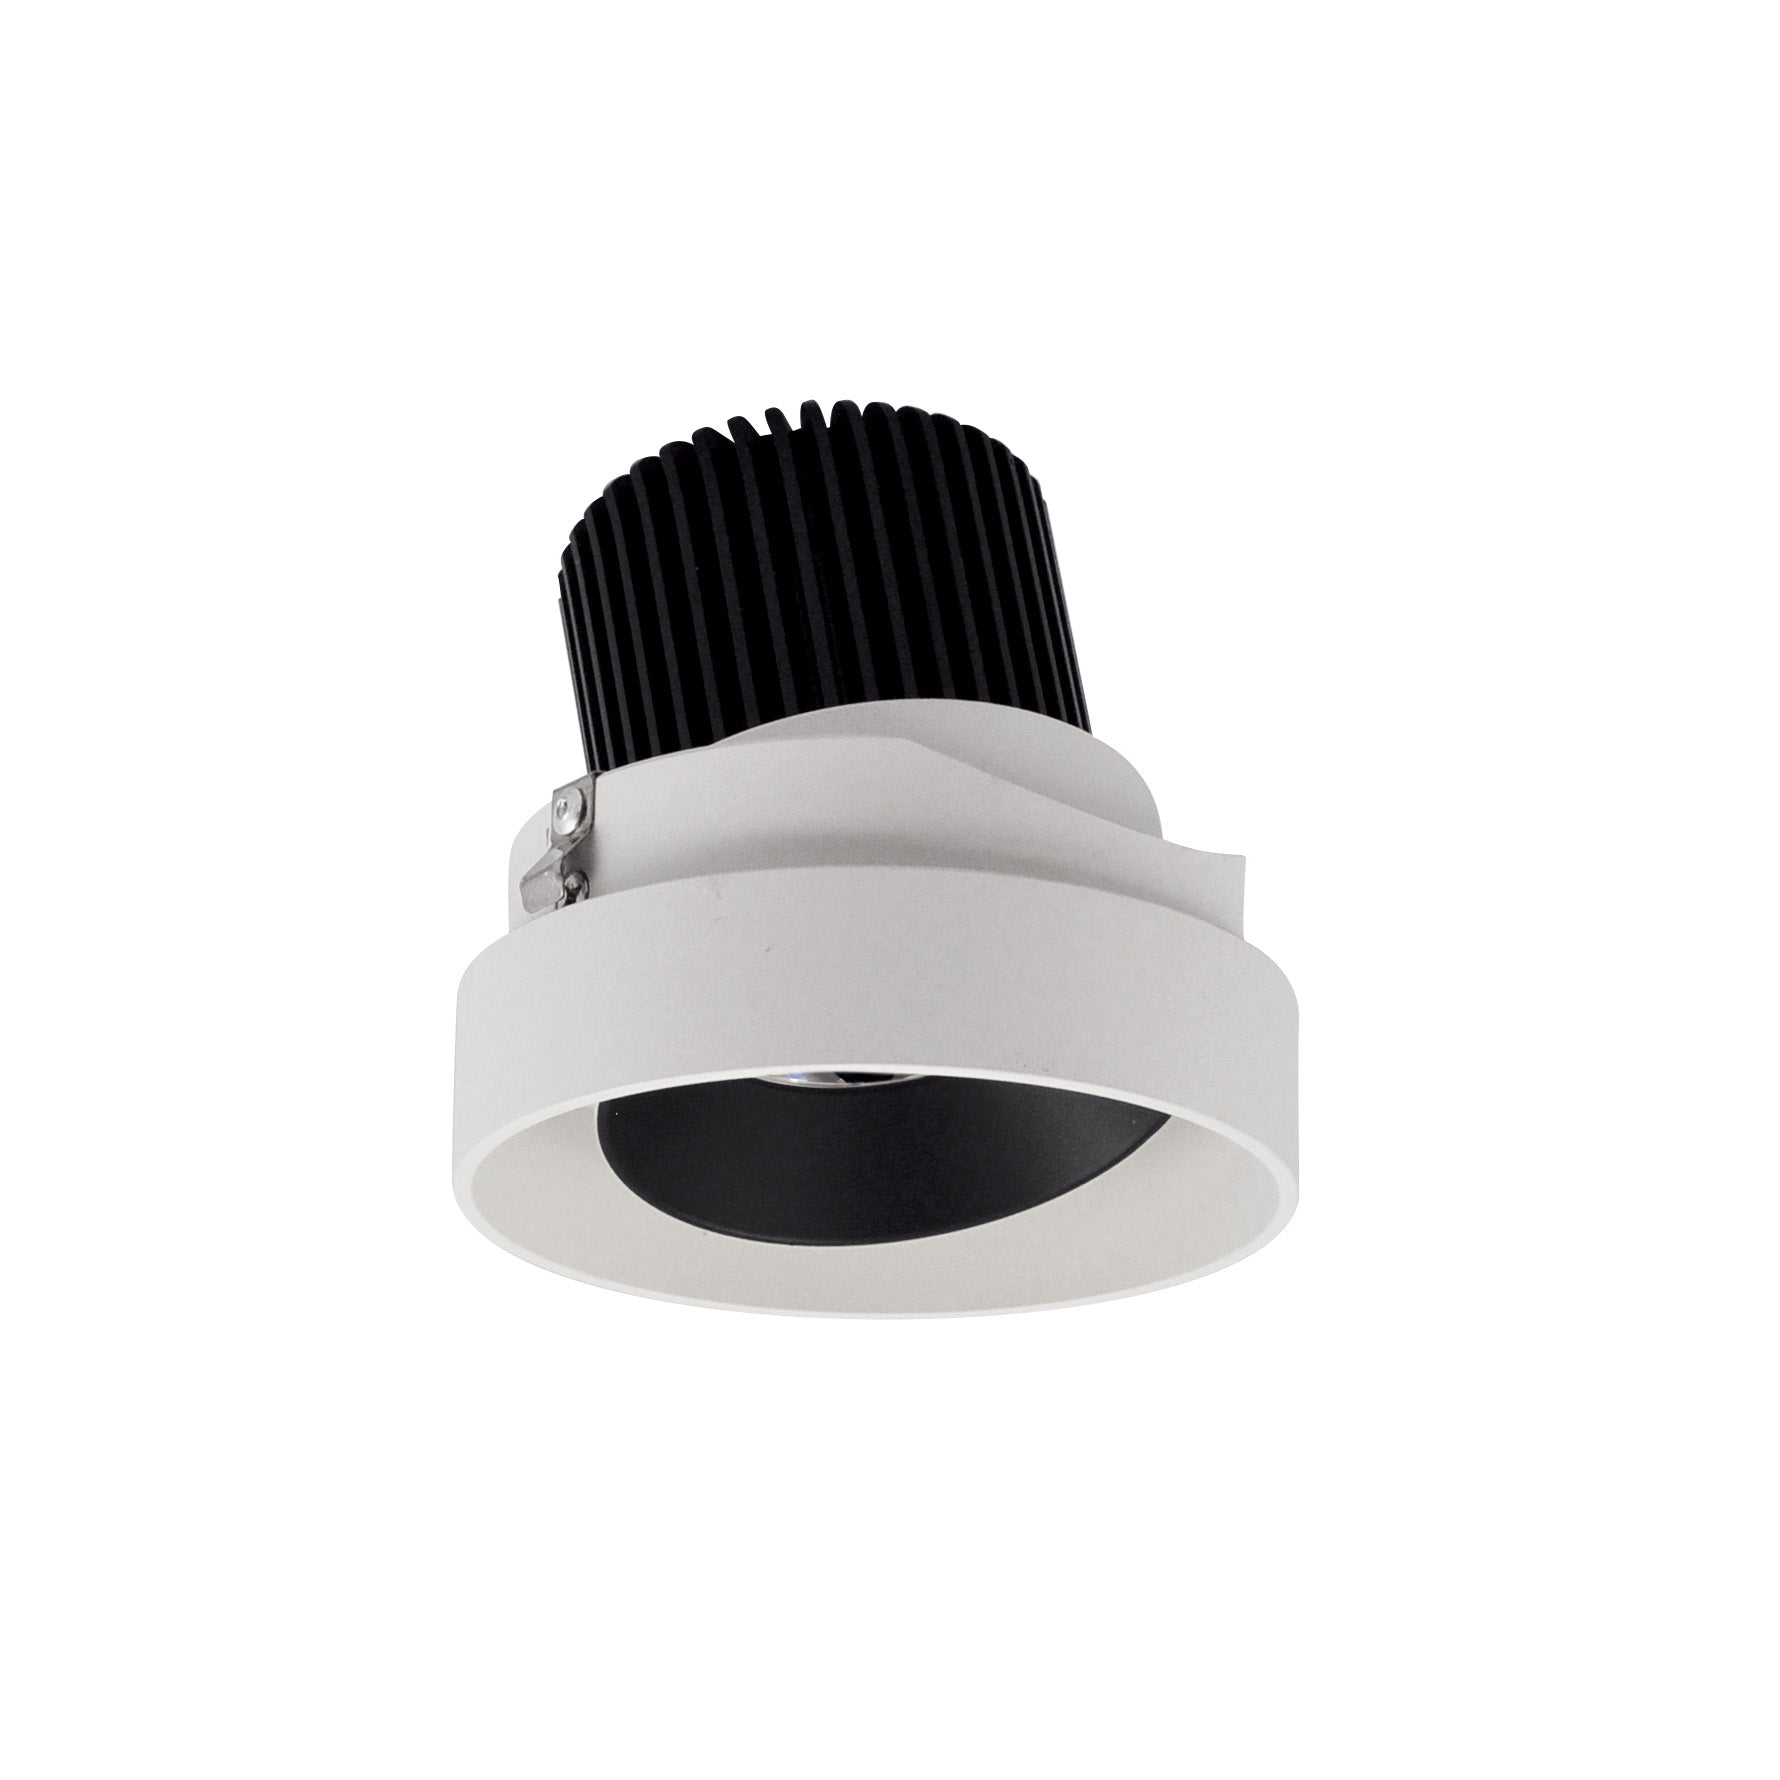 Nora Lighting NIO-4RTLA35QBW 4" Iolite LED Round Trimless Adjustable, 10-Degree Optic, 800lm / 12W, 3500K - Black Adjustable / White Reflector